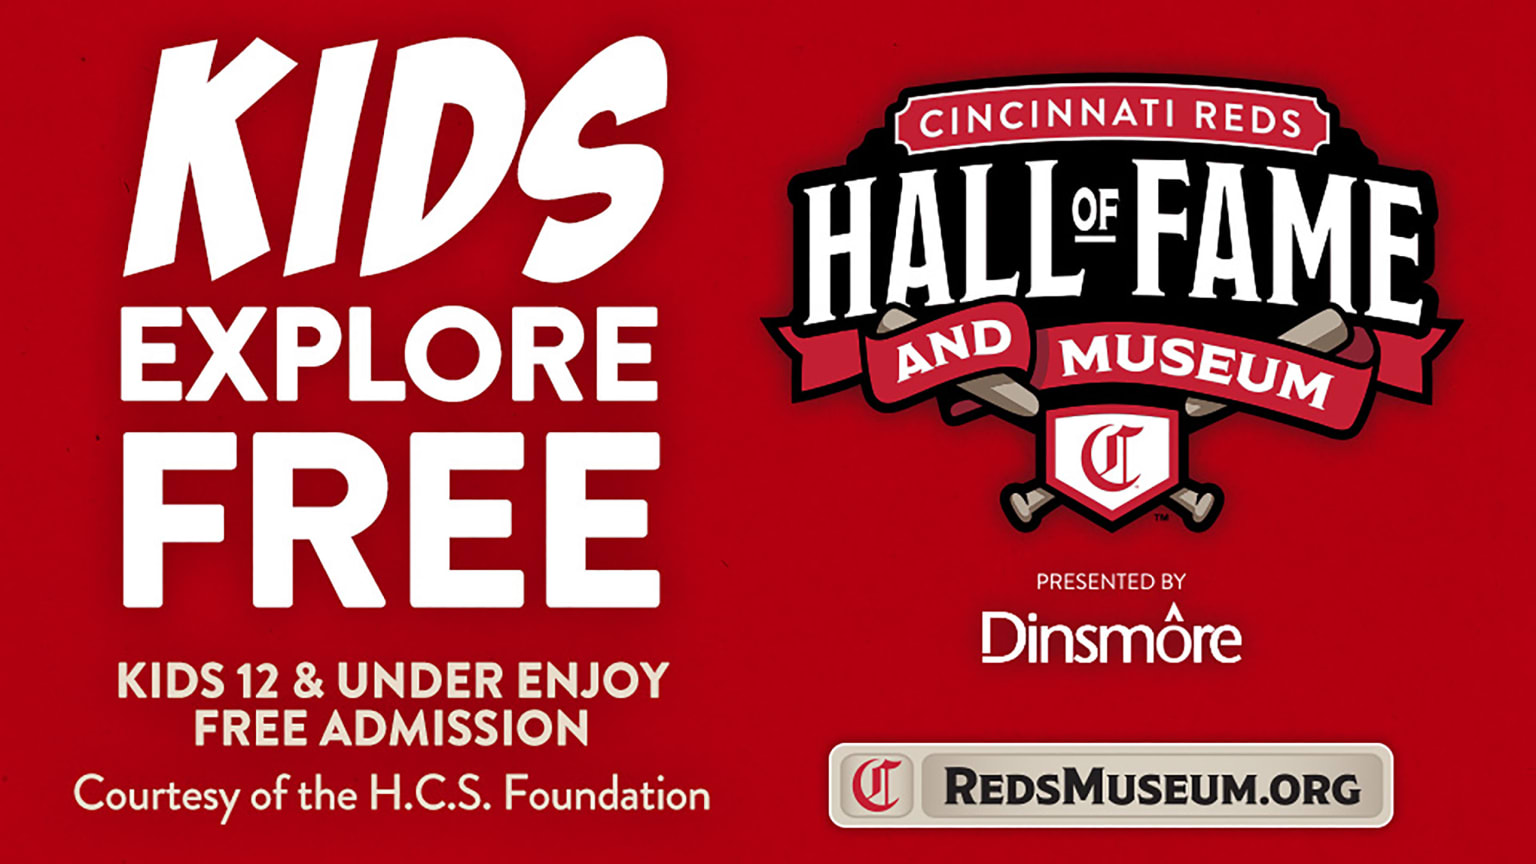 Reds Hall of Fame Weekend in Cincinnati